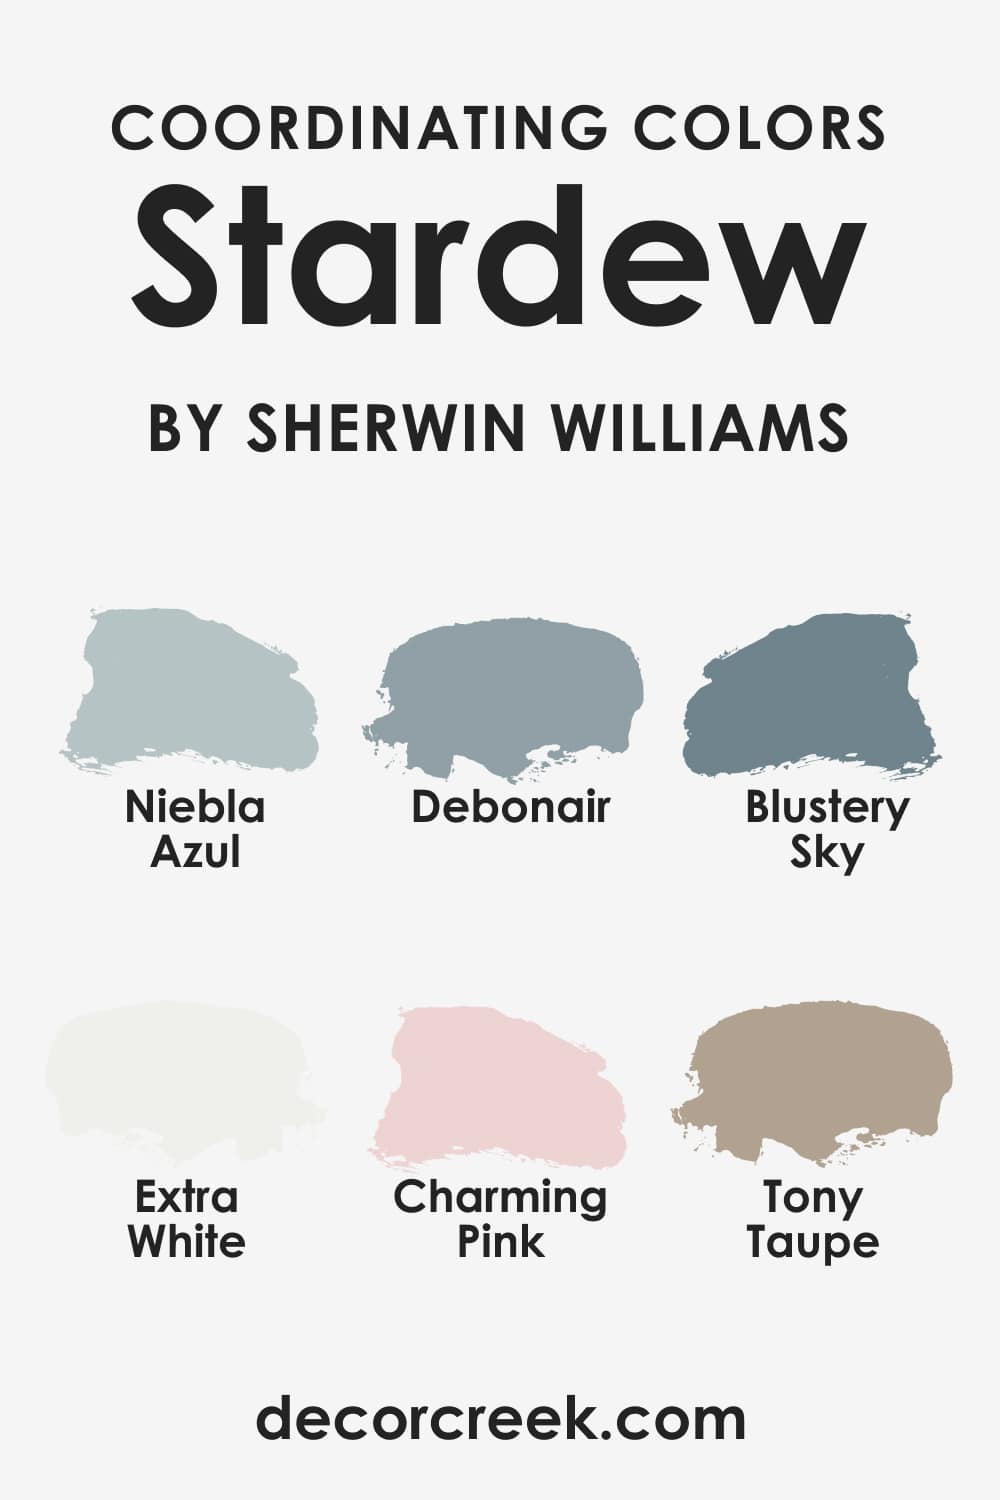 Coordinating Colors of Stardew SW-9138